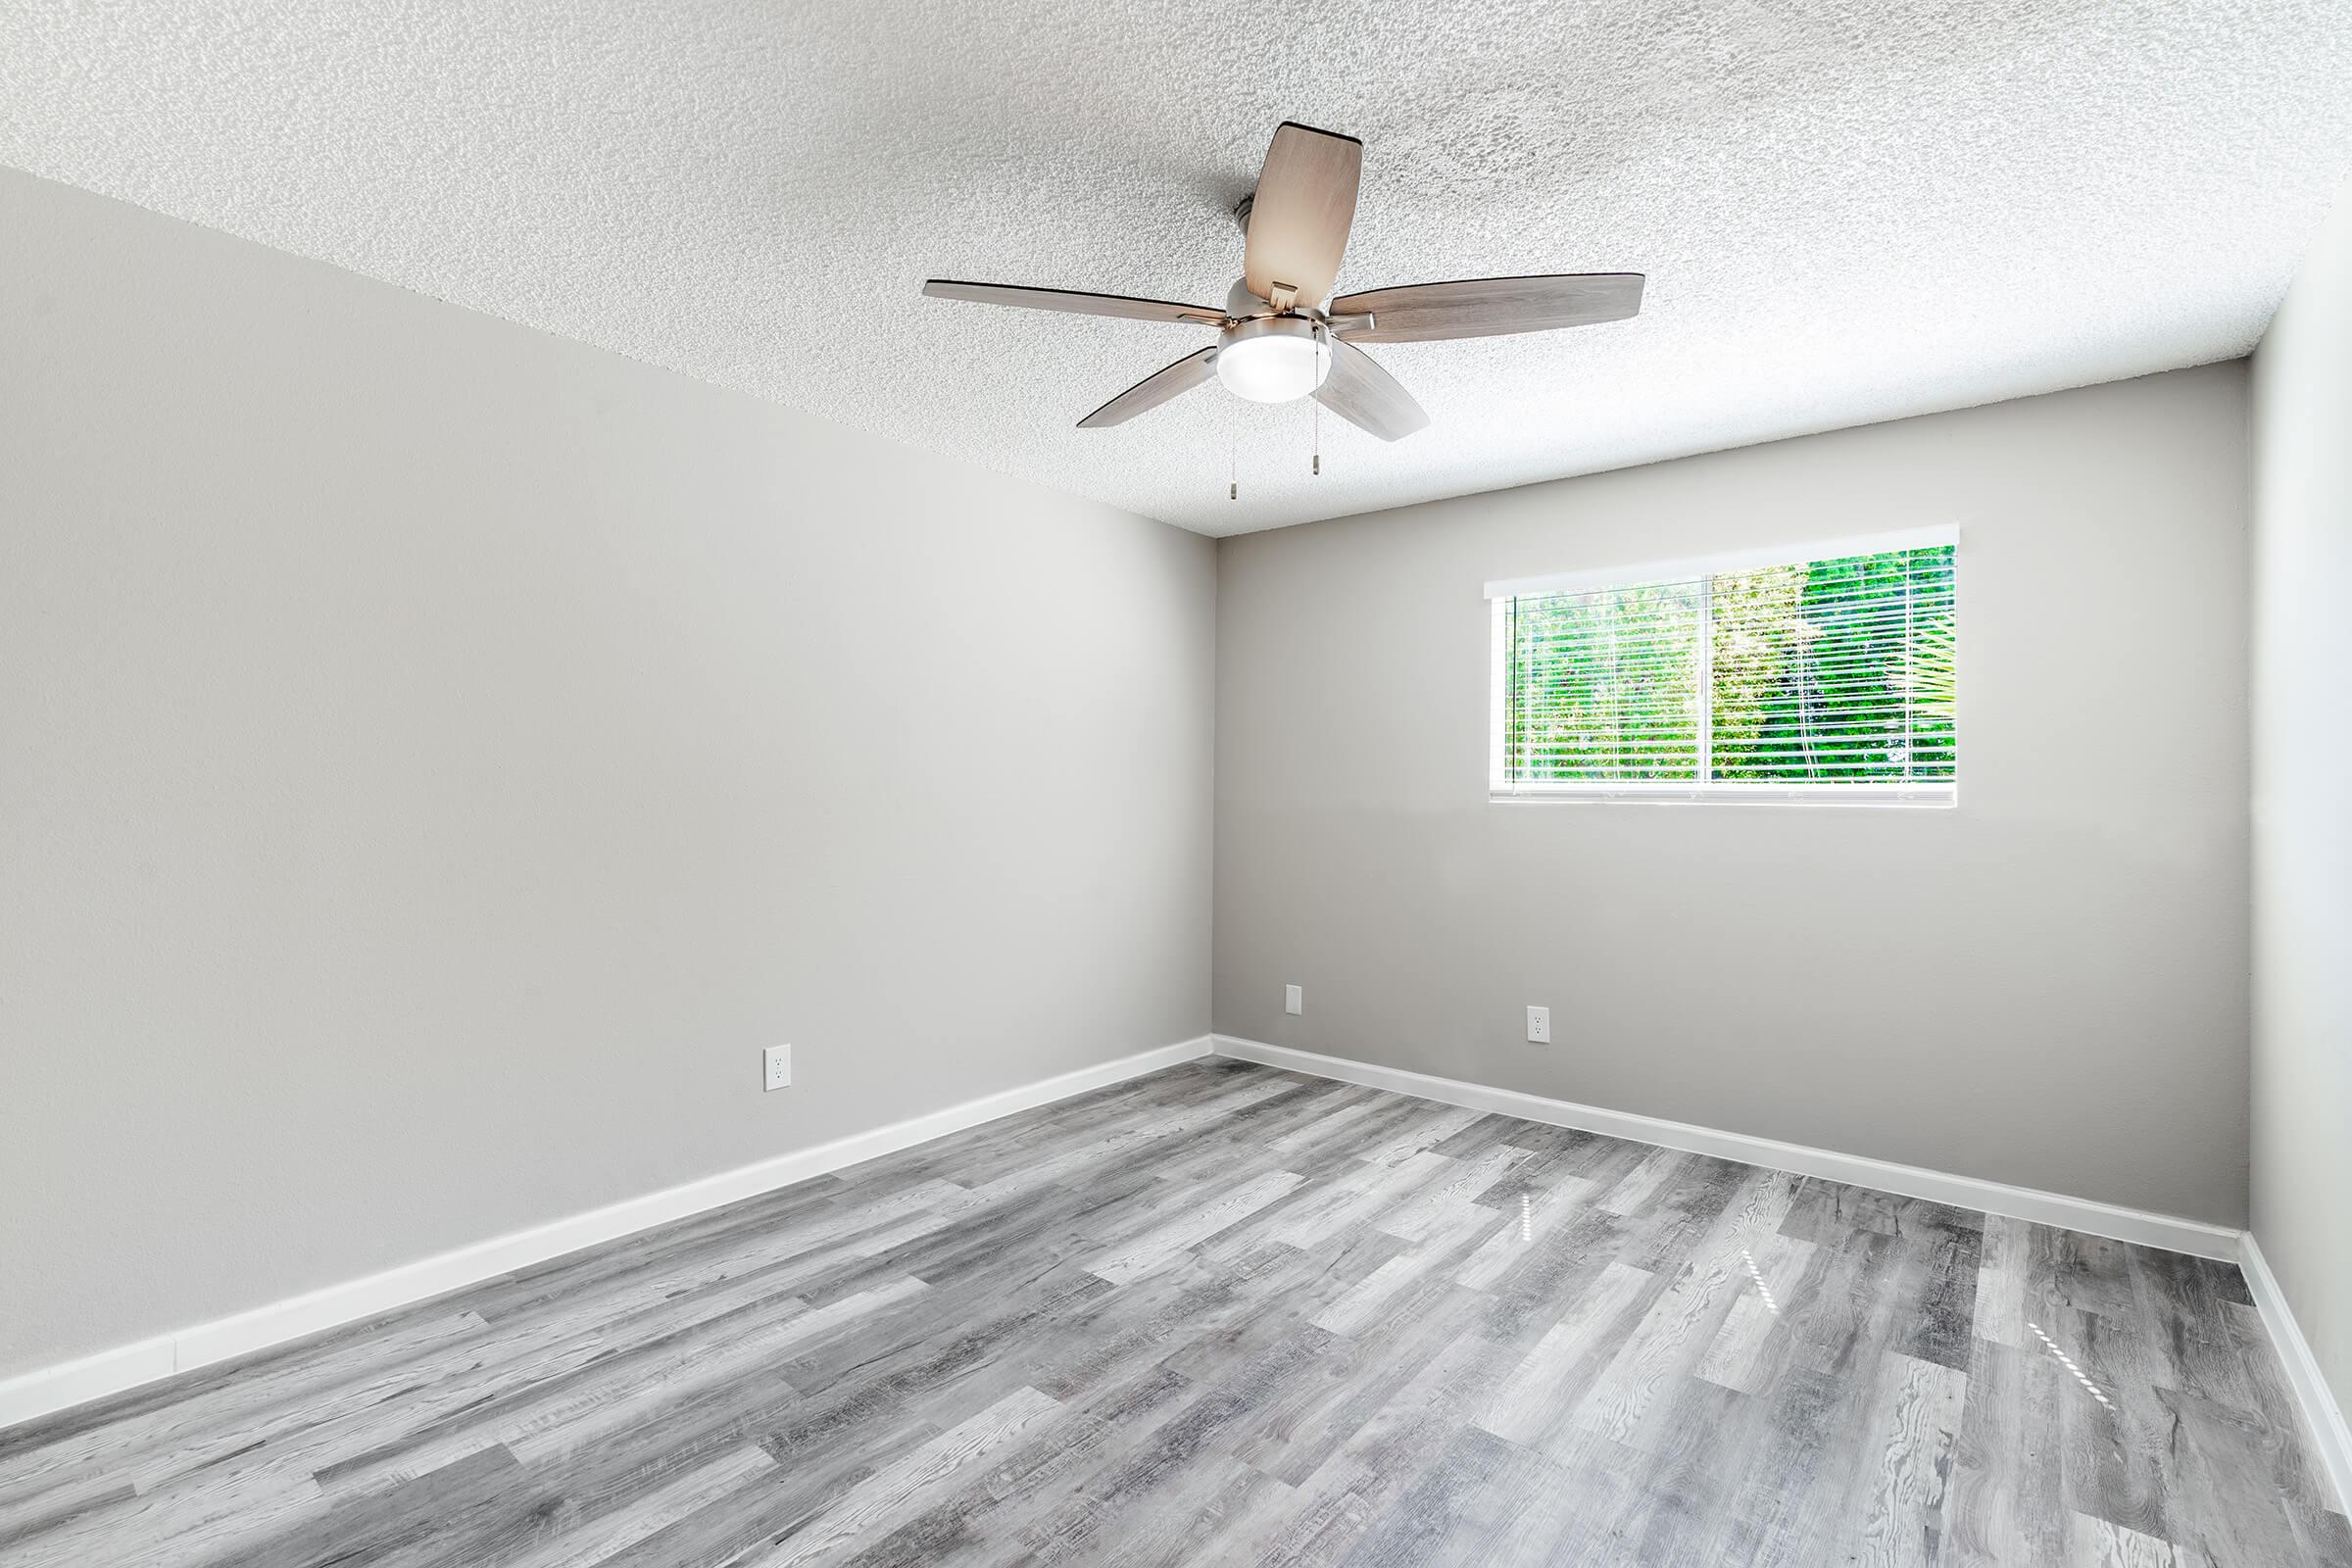 Spacious modern bedroom with grey wood floorings, grey walls, a window, and ceiling fan